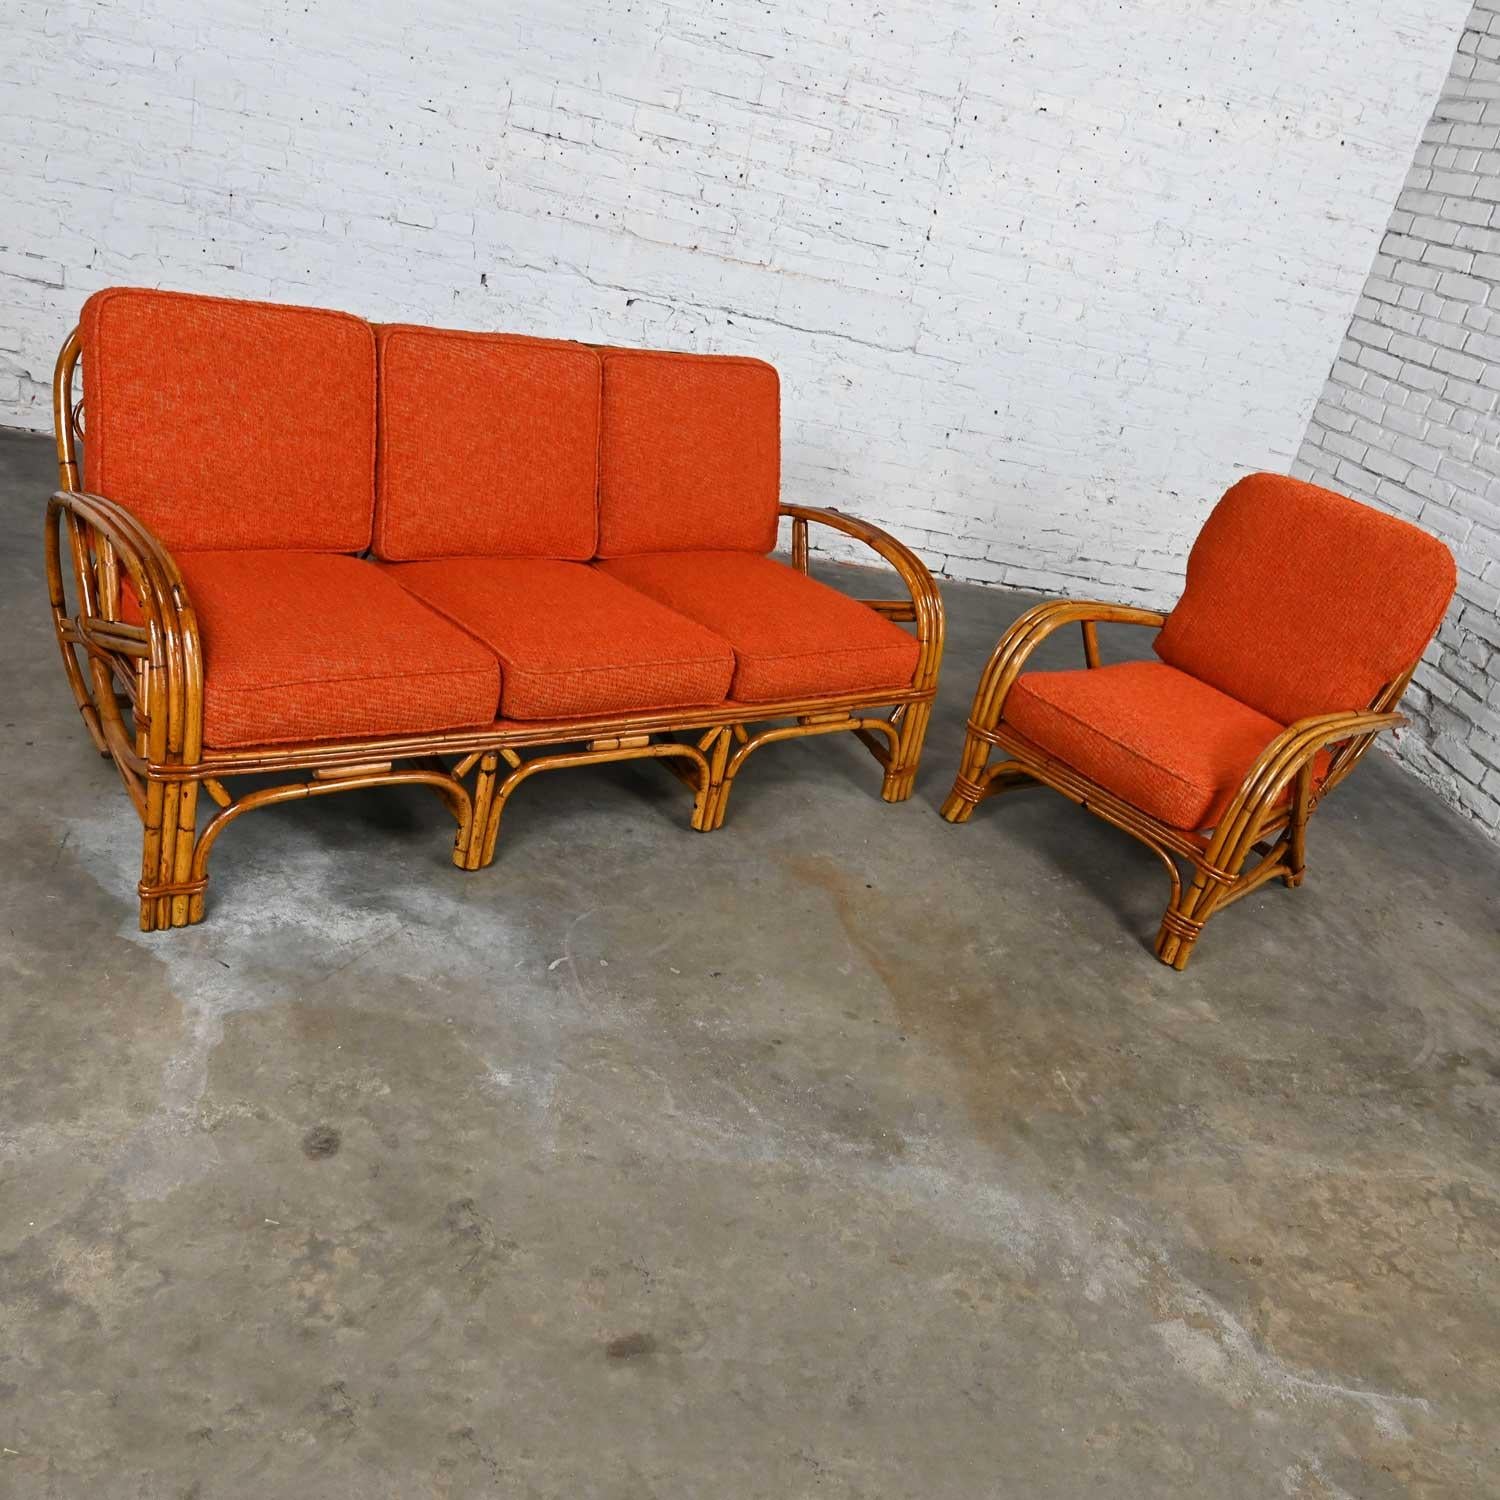 Triple Strand Rattan Sofa & Chair Orange Fabric Cushions Style Heywood Wakefield For Sale 1